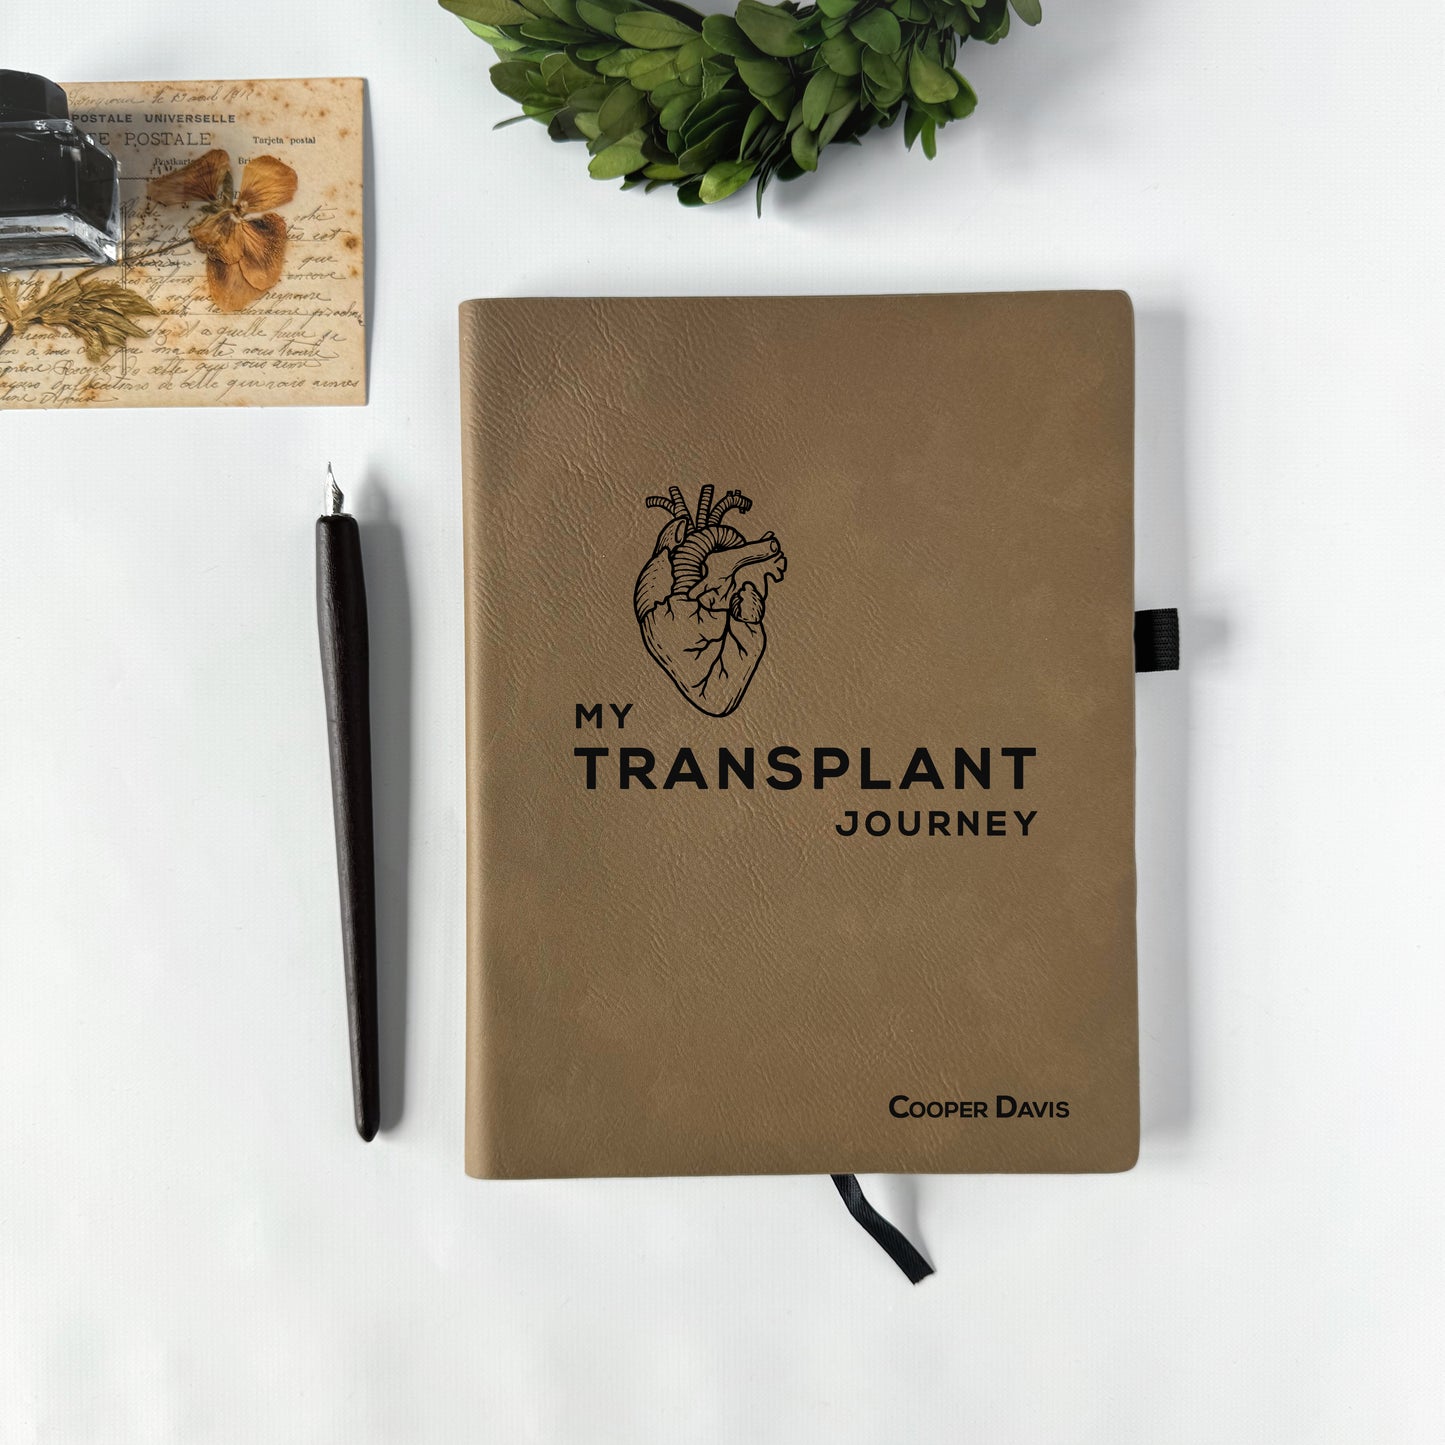 Custom engraved transplant journey notebook, journal for heart transplant recipients